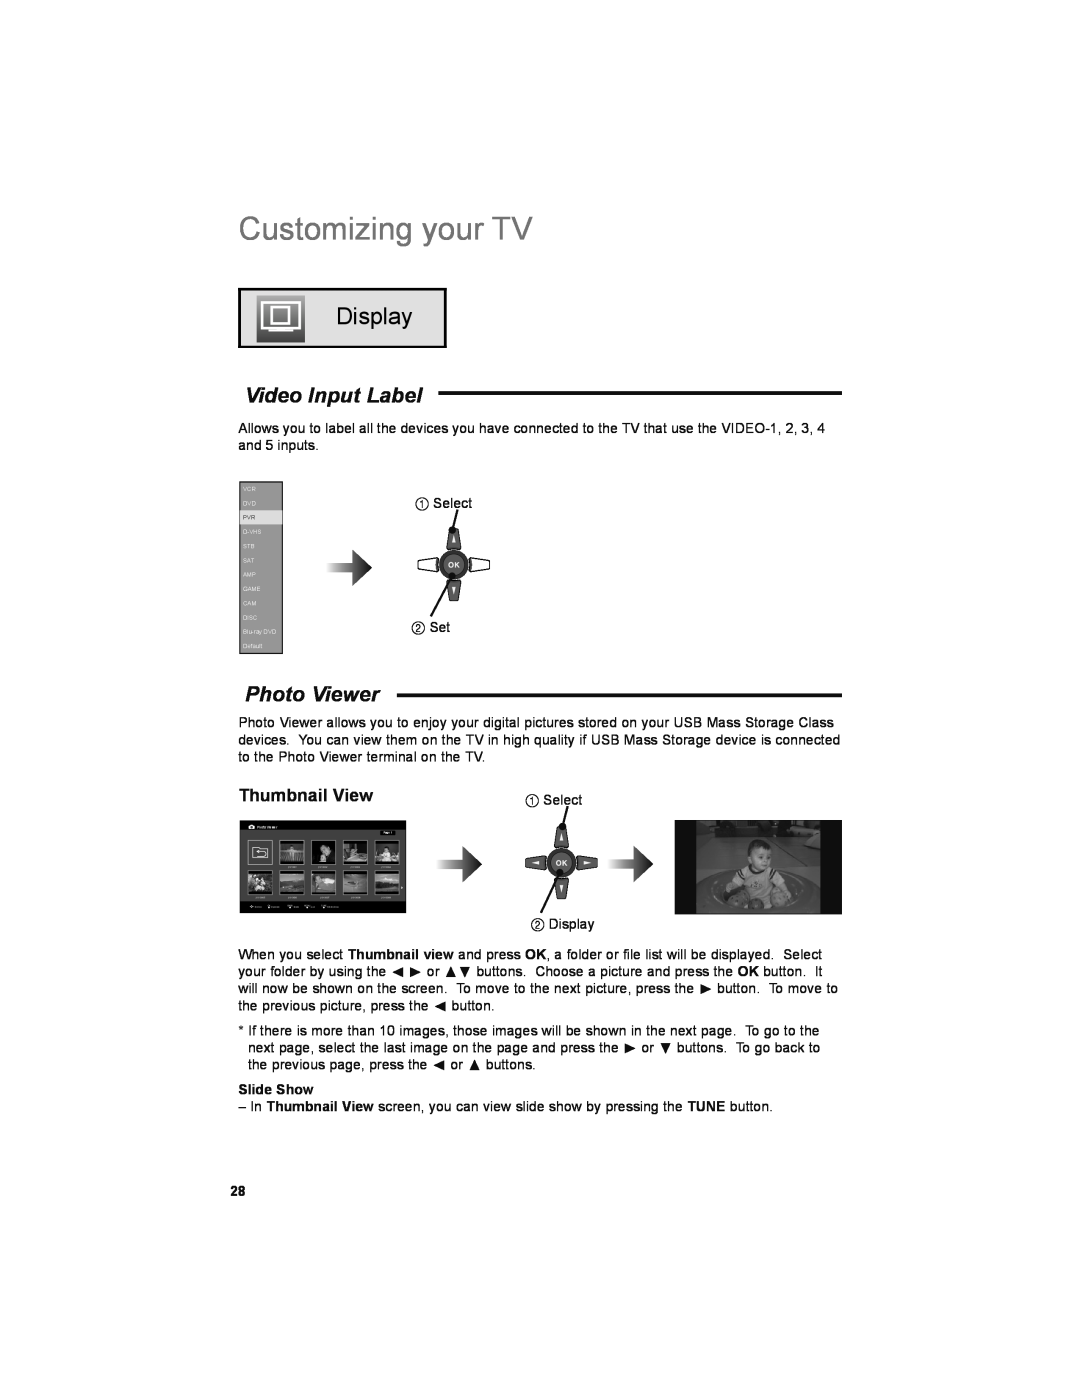 JVC LT-32JM30 manual Display, Video Input Label, Photo Viewer, Customizing your TV, Slide Show 